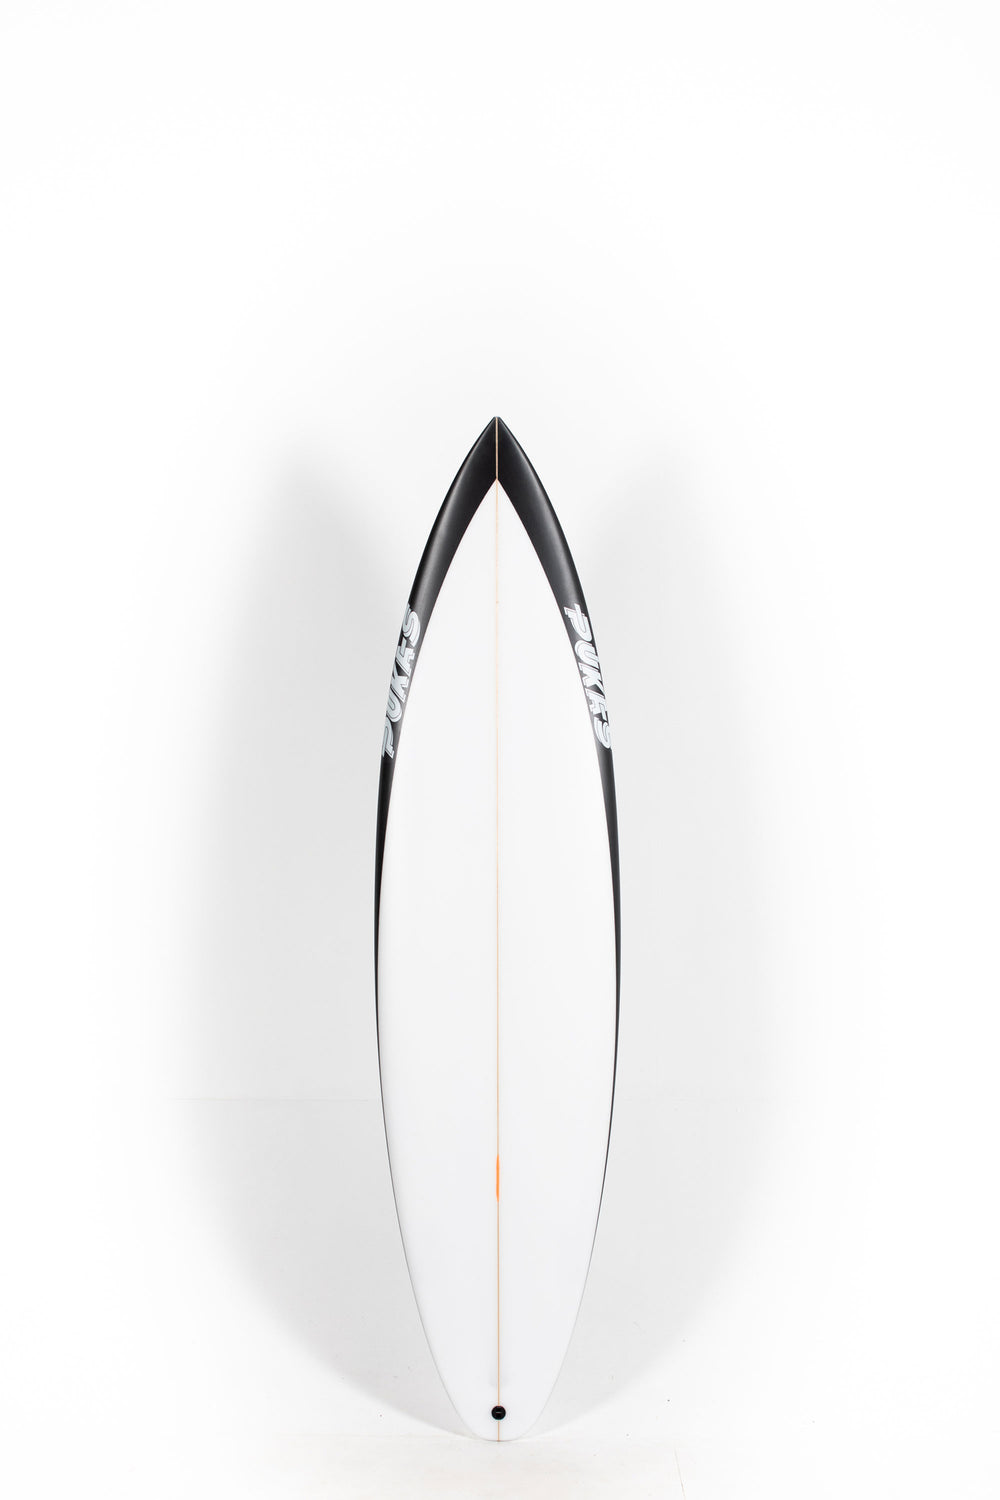 Pukas Surf Shop - Pukas Surfboards - WATER LION by Chris Christenson - 6'5